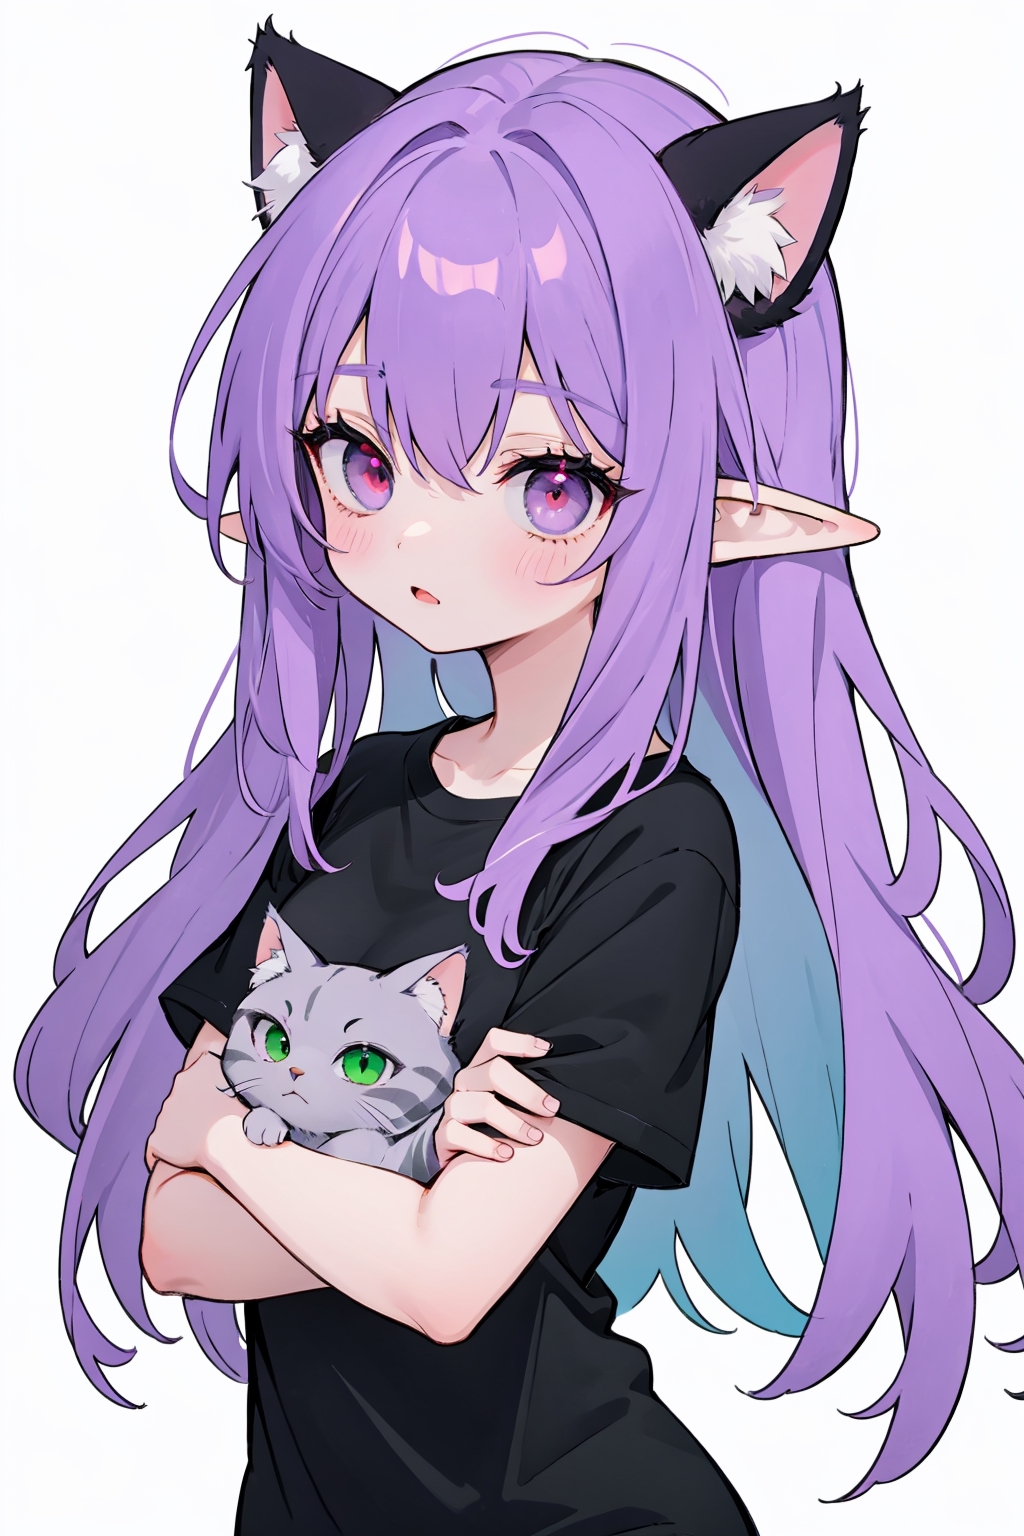 anime girl with purple hair and cat ears